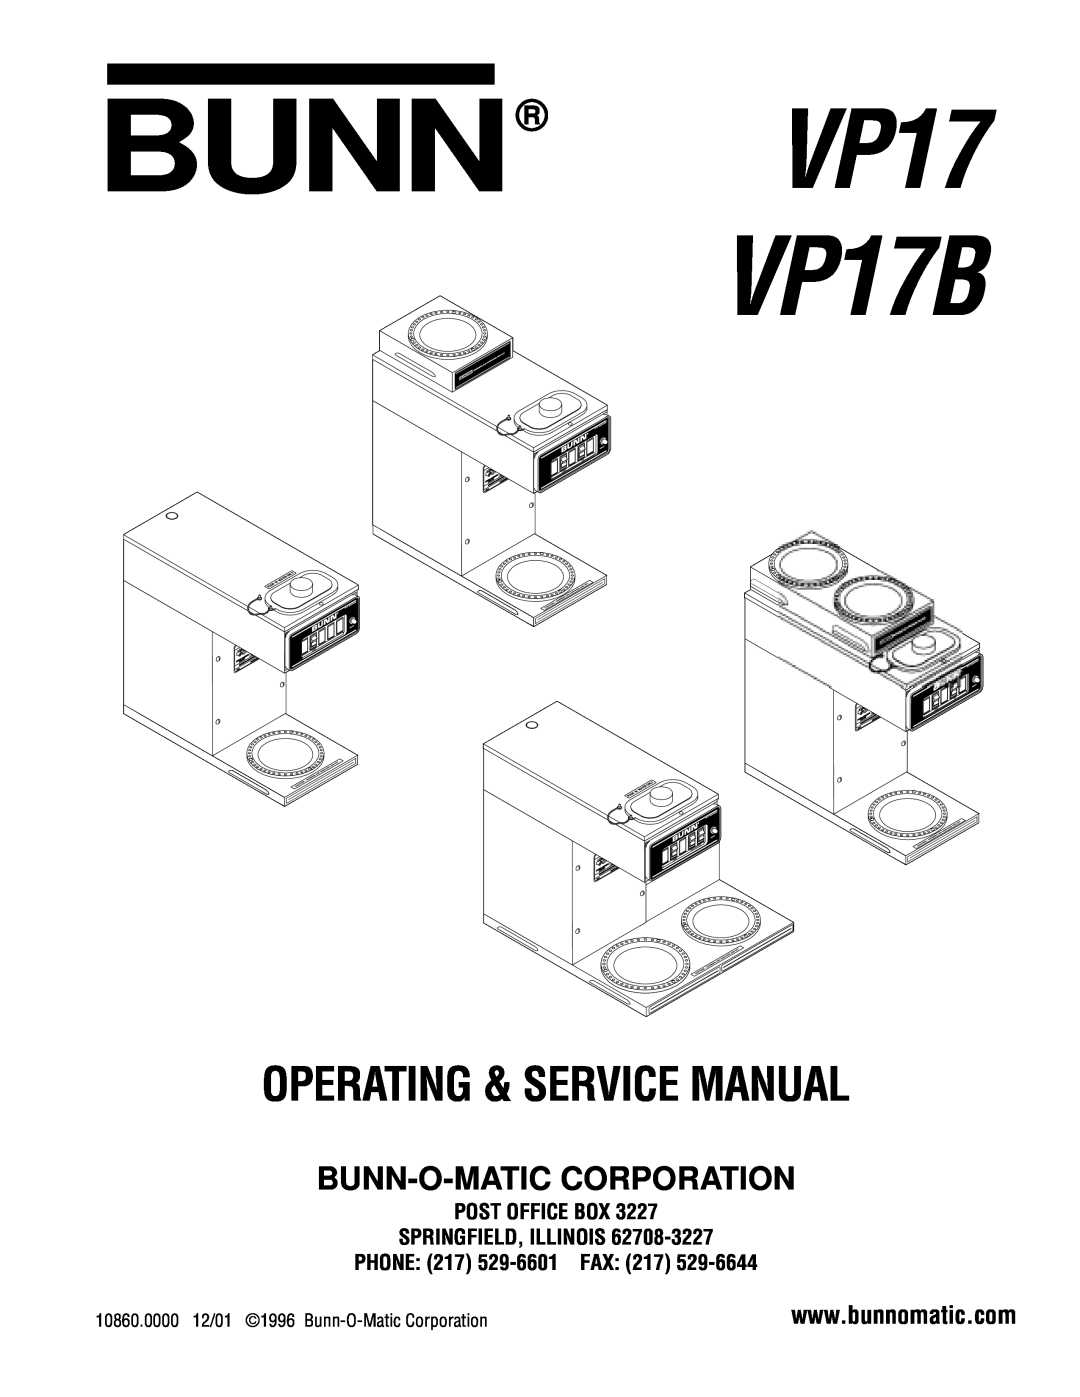 Bunn VP17B service manual Bunn-O-Matic Corporation, POST OFFICE BOX SPRINGFIELD, ILLINOIS PHONE 217 529-6601 FAX, BUNNVP17 